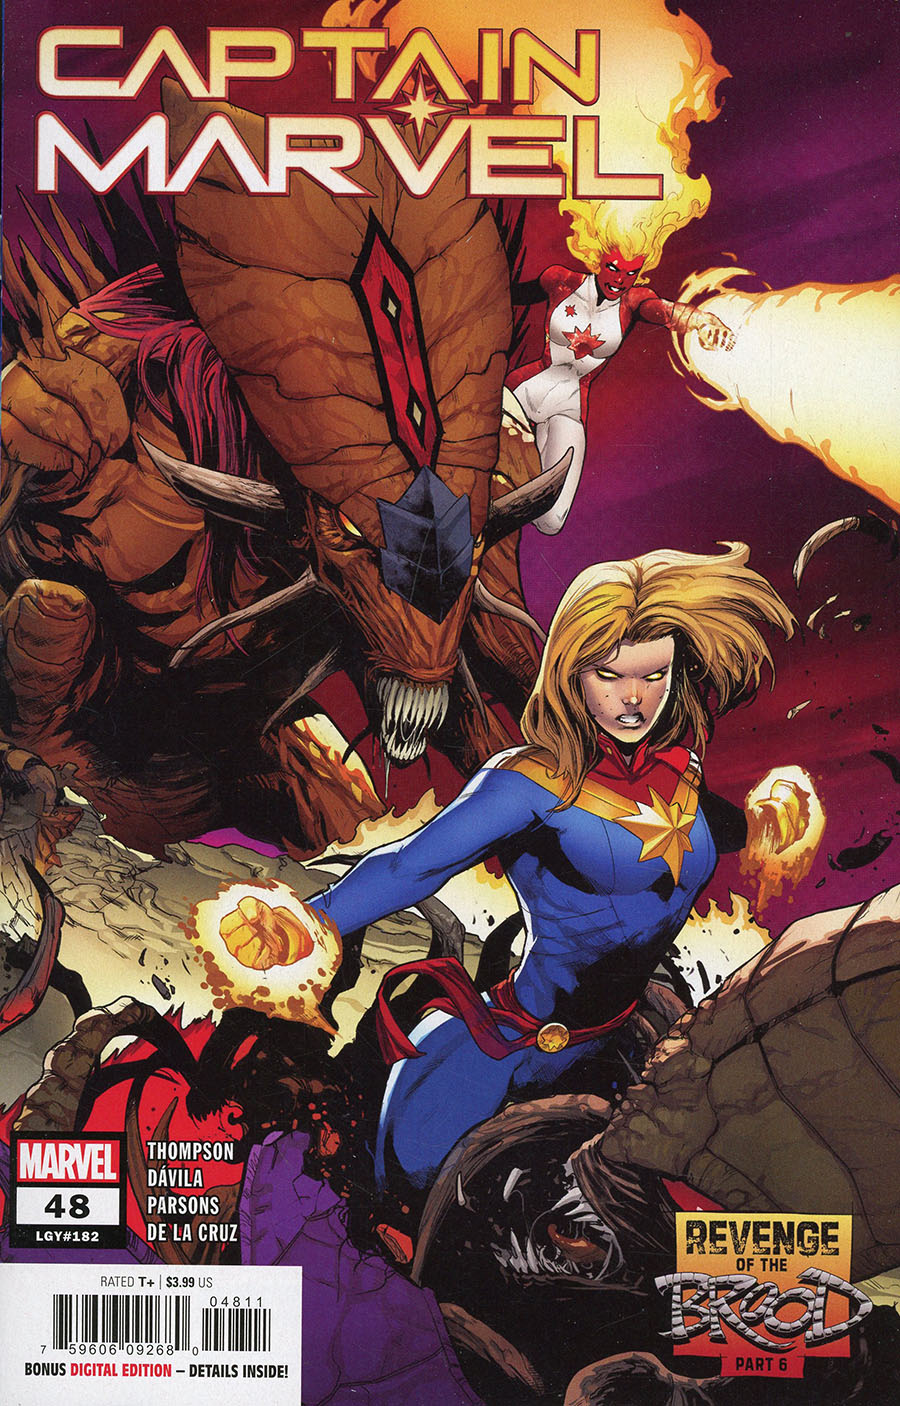 Captain Marvel Vol 9 #48 Cover A Regular Juan Frigeri Cover (Revenge Of The Brood Tie-In)